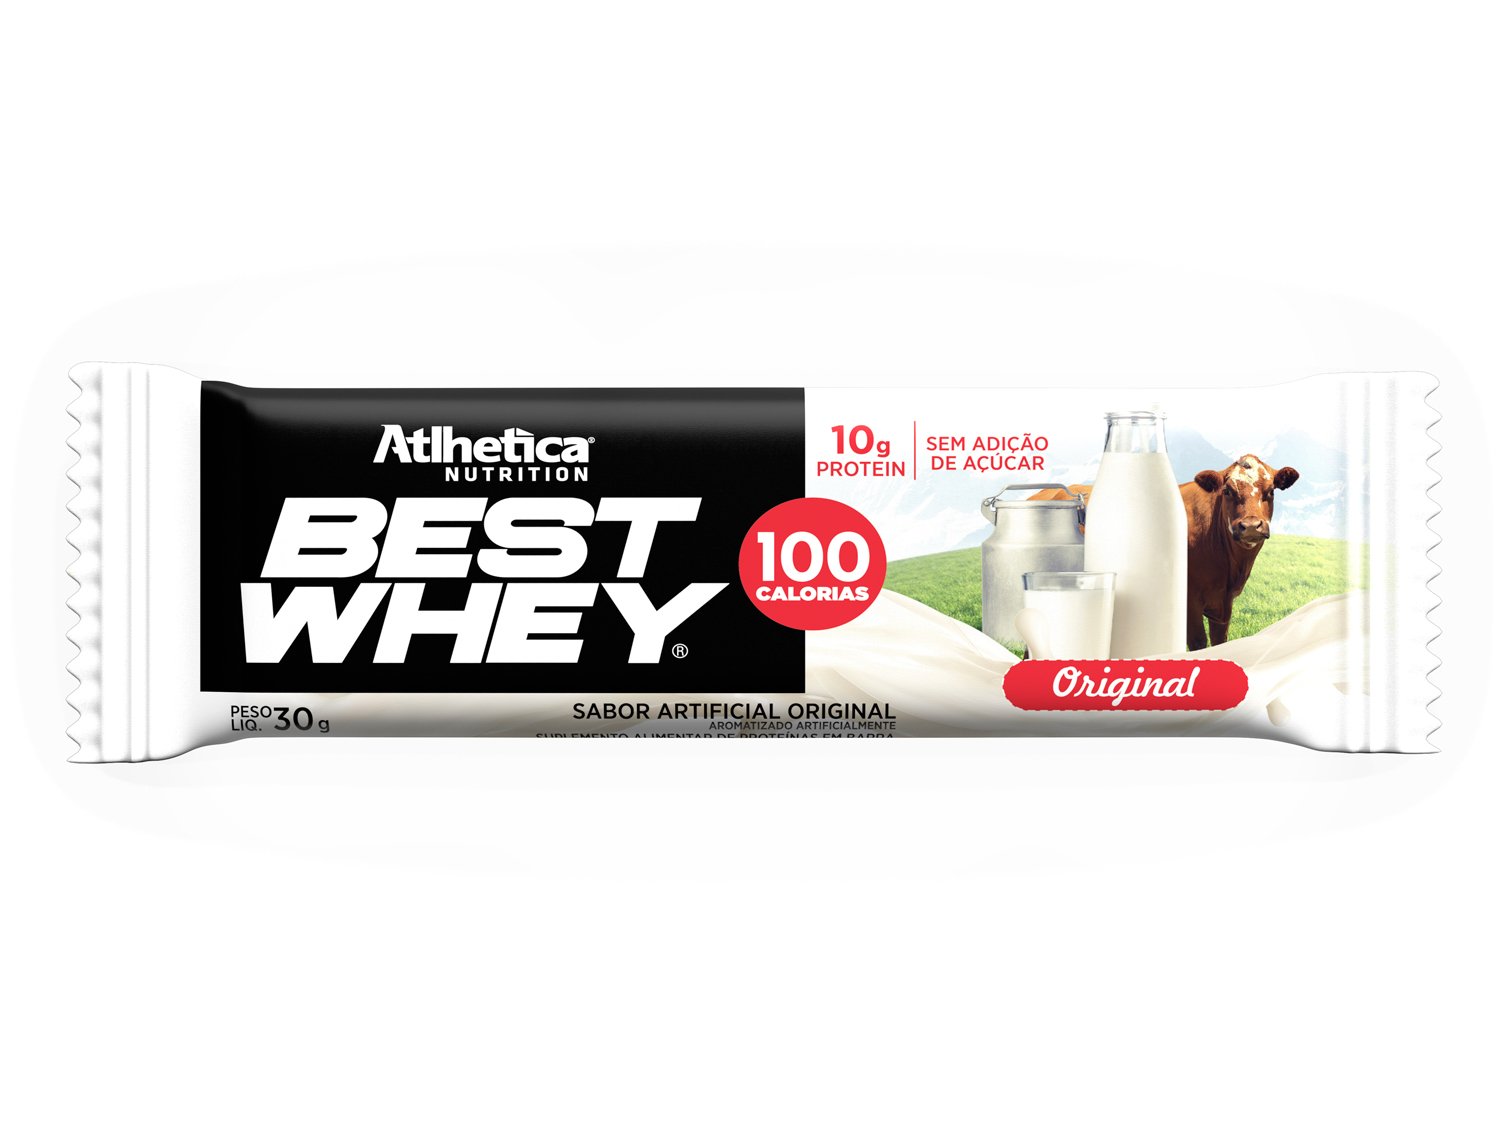 Best Whey Bar Display Atlhetica Nutrition 12 barras - 2